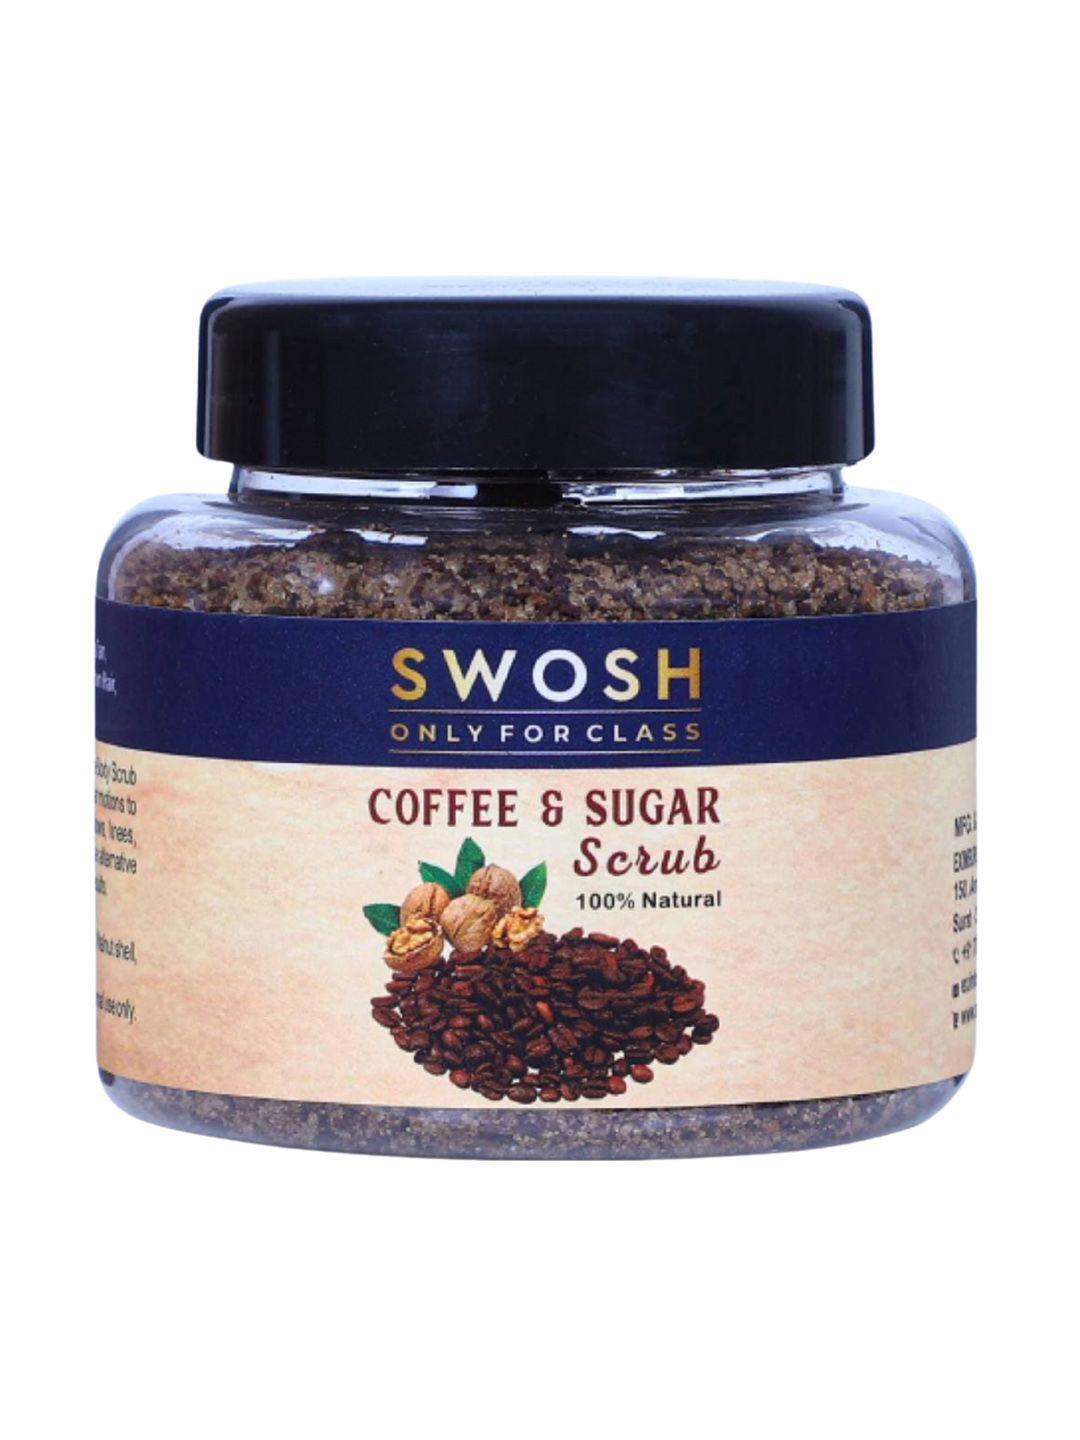 swosh exfoliating coffee & sugar scrub with walnut shell extract for face & body - 115g